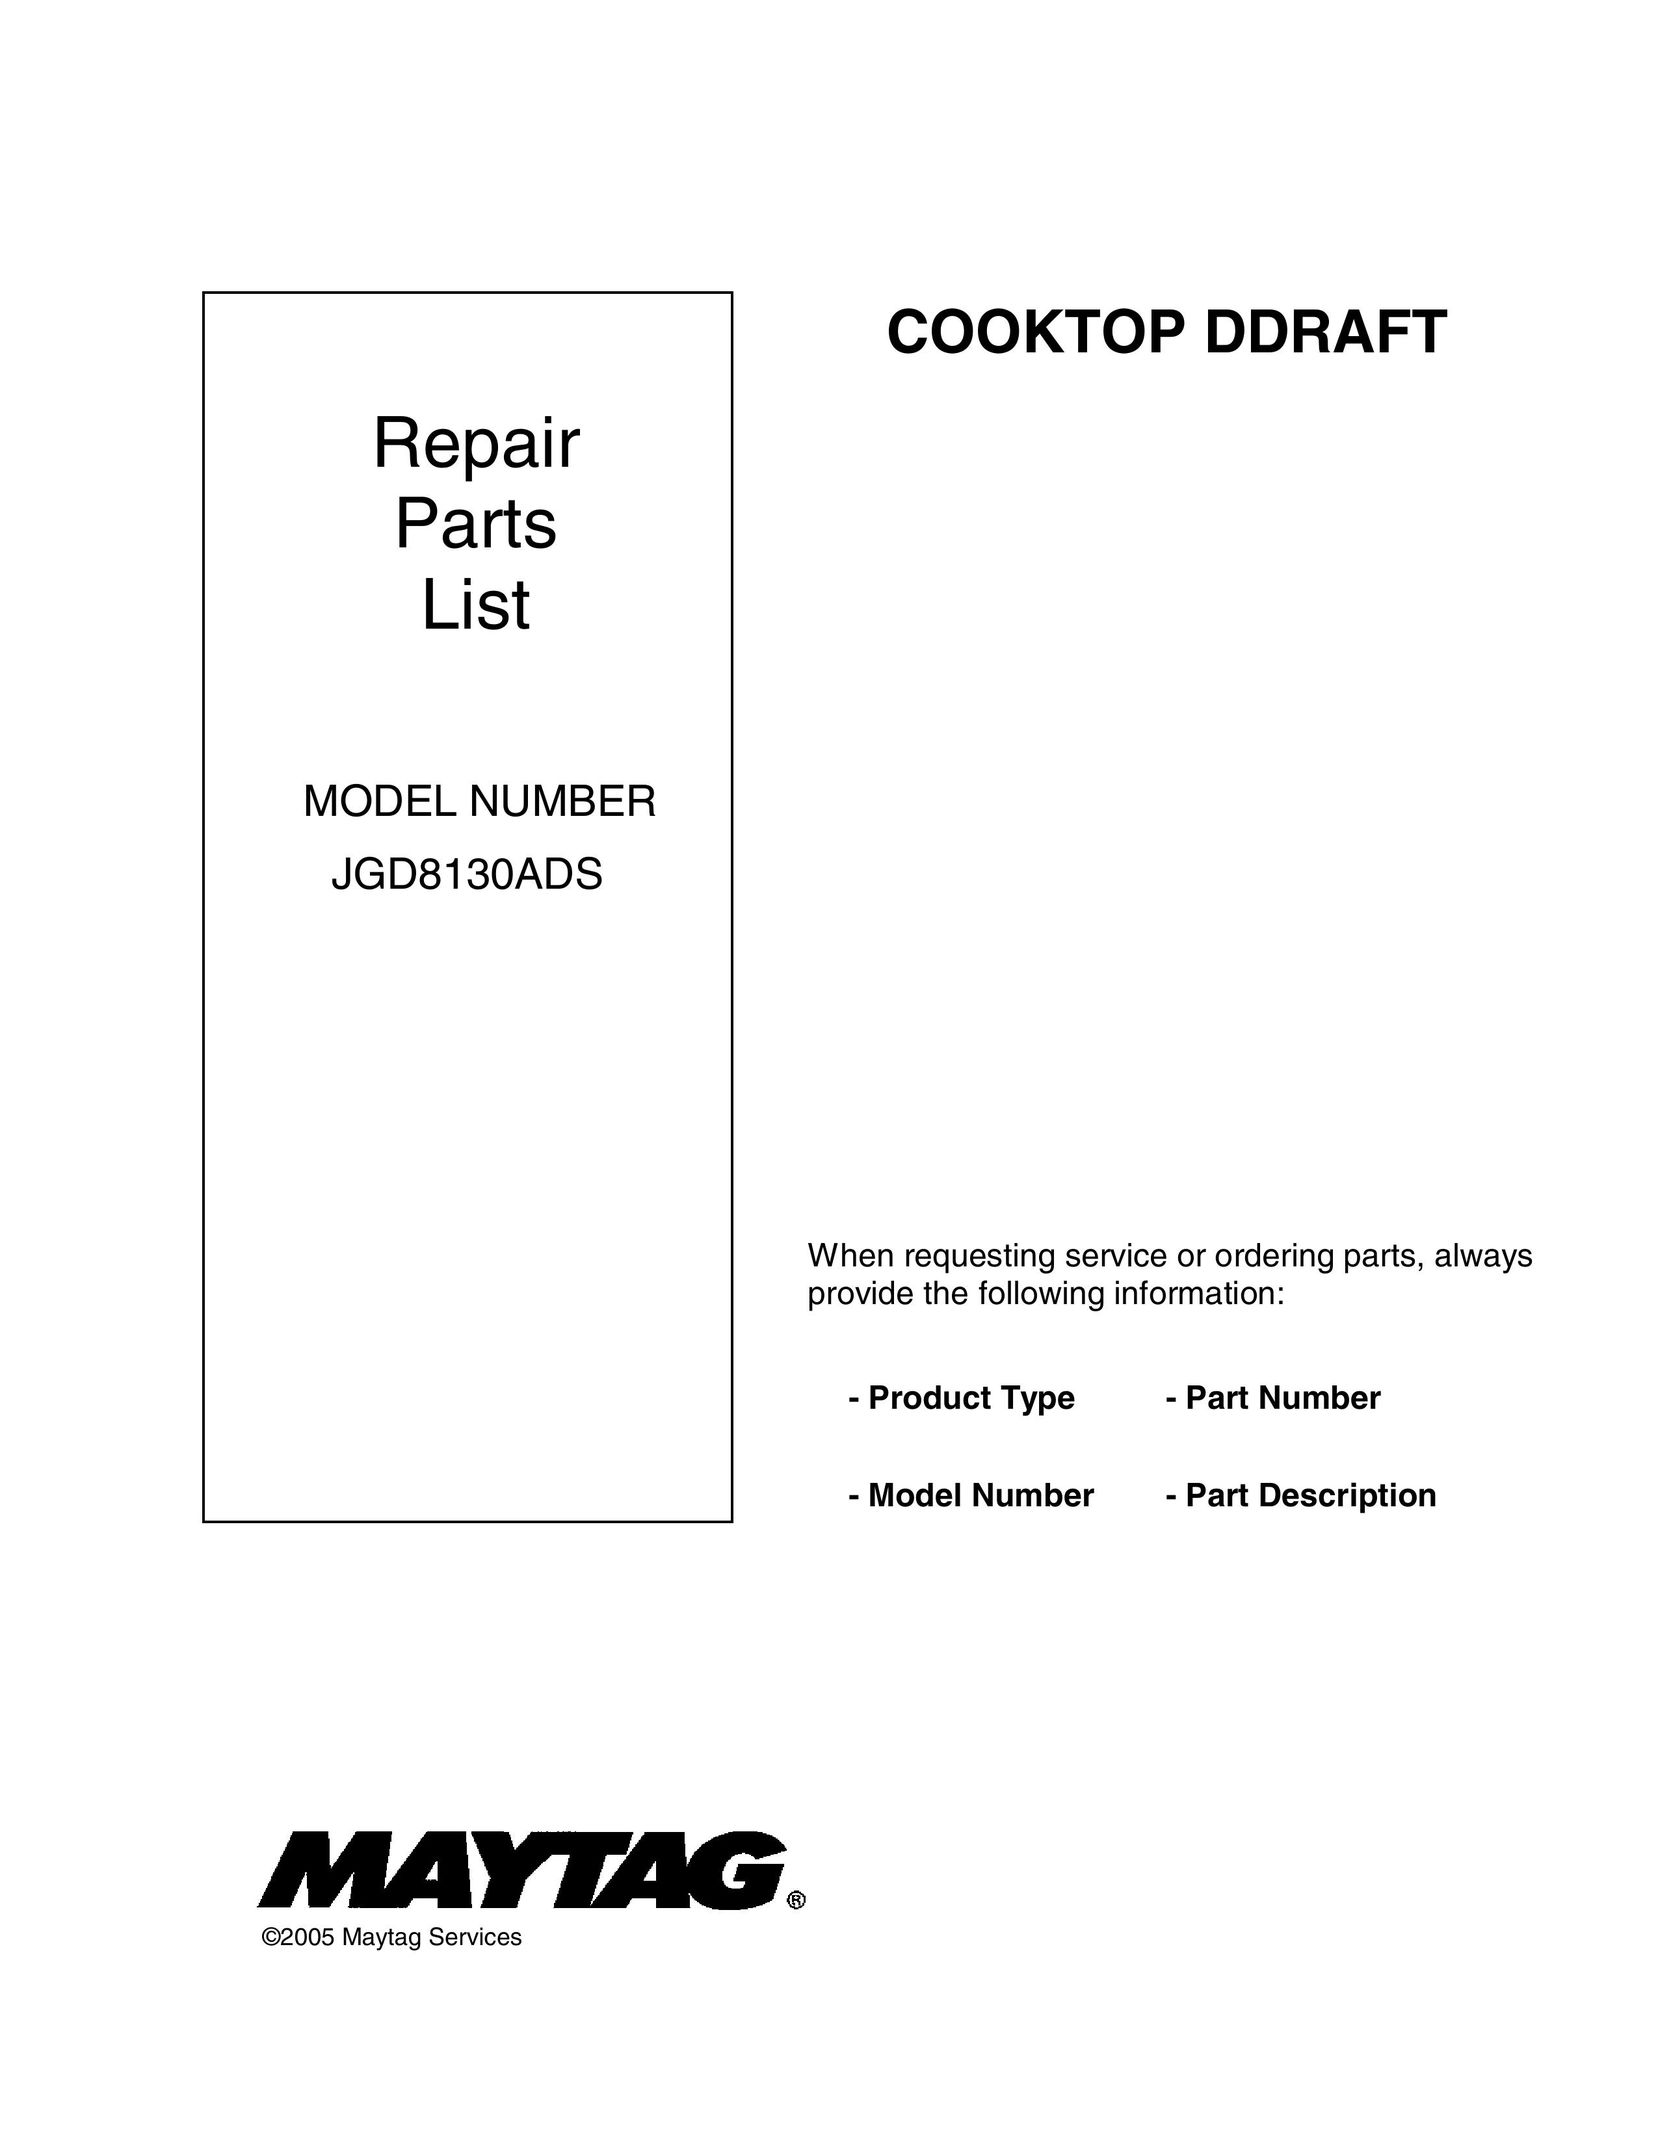 Maytag JGD8130ADS Cooktop User Manual